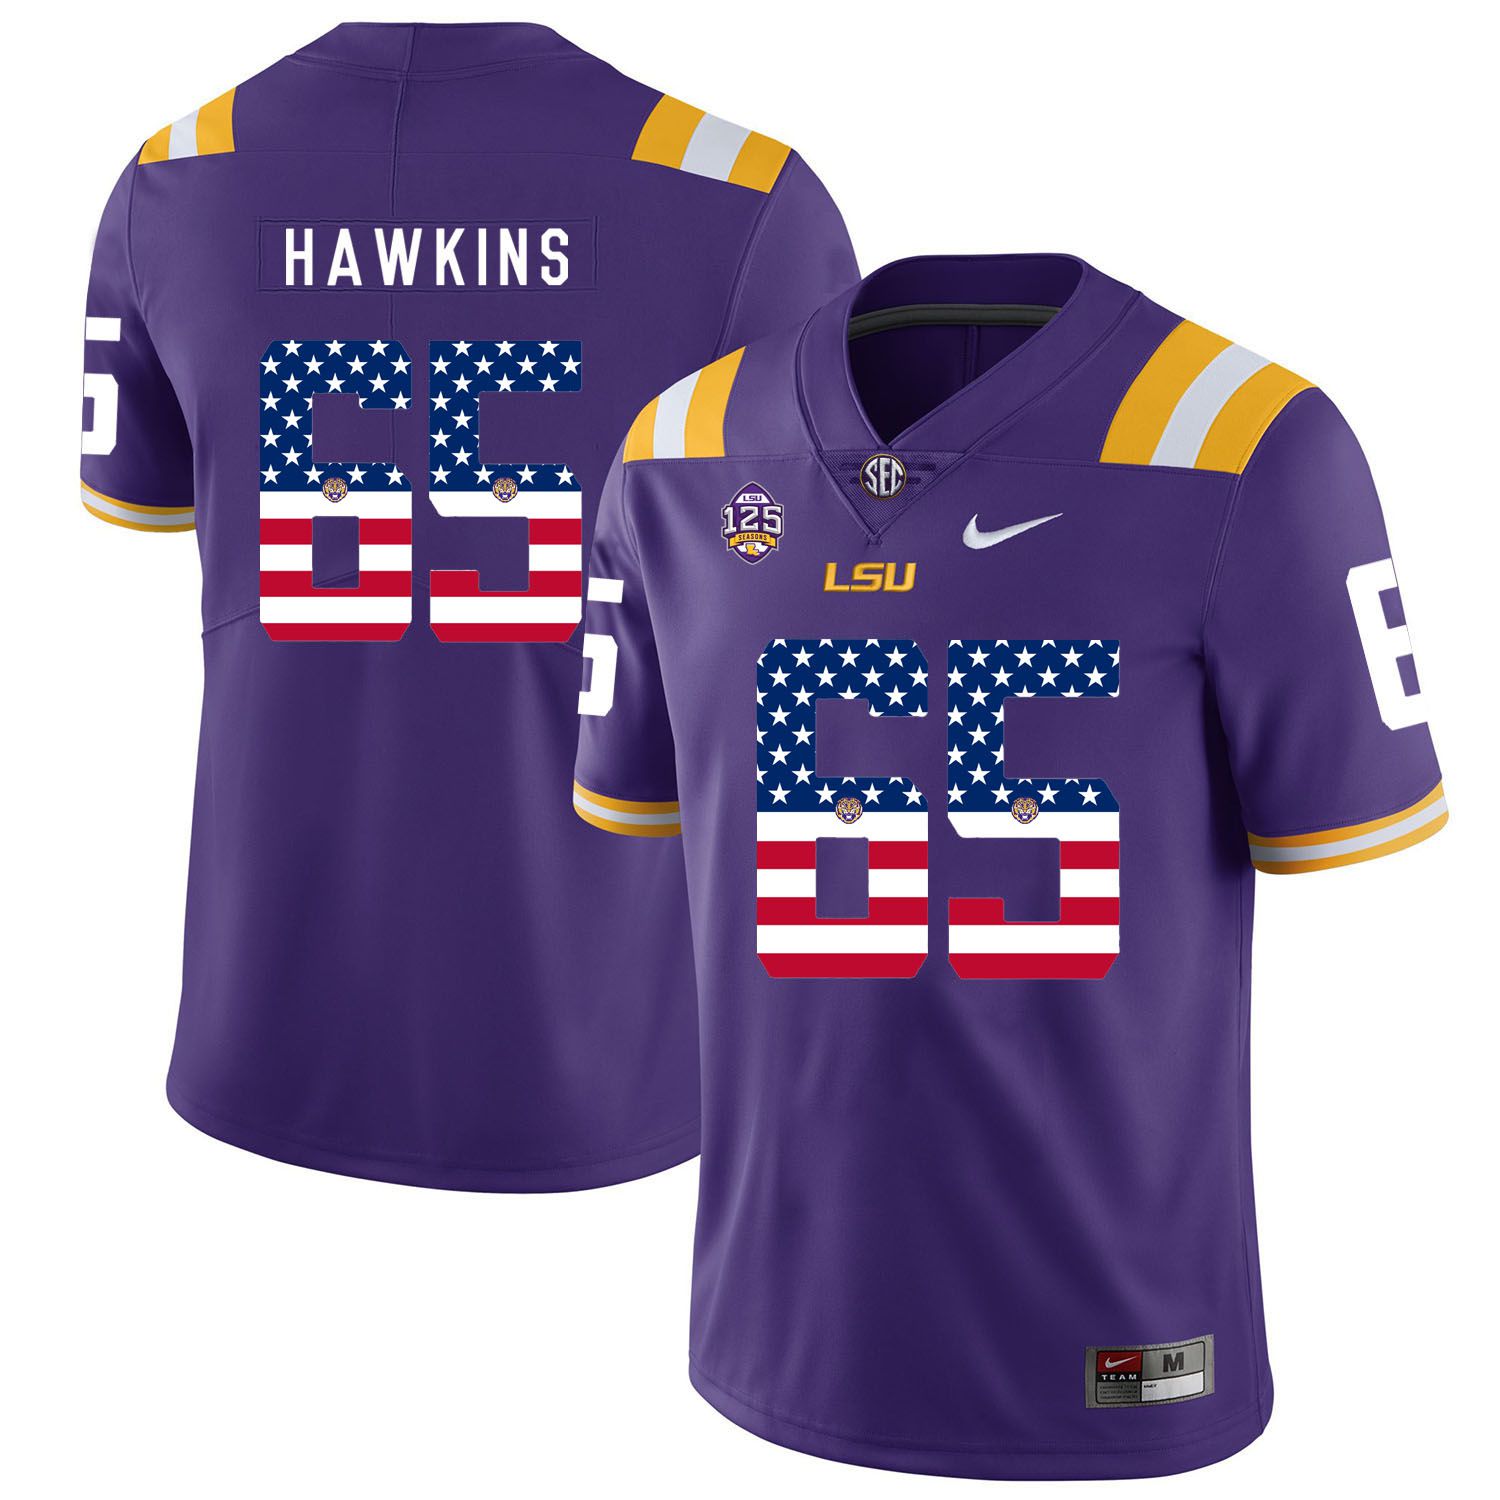 Men LSU Tigers 65 Hawkins Purple Flag Customized NCAA Jerseys